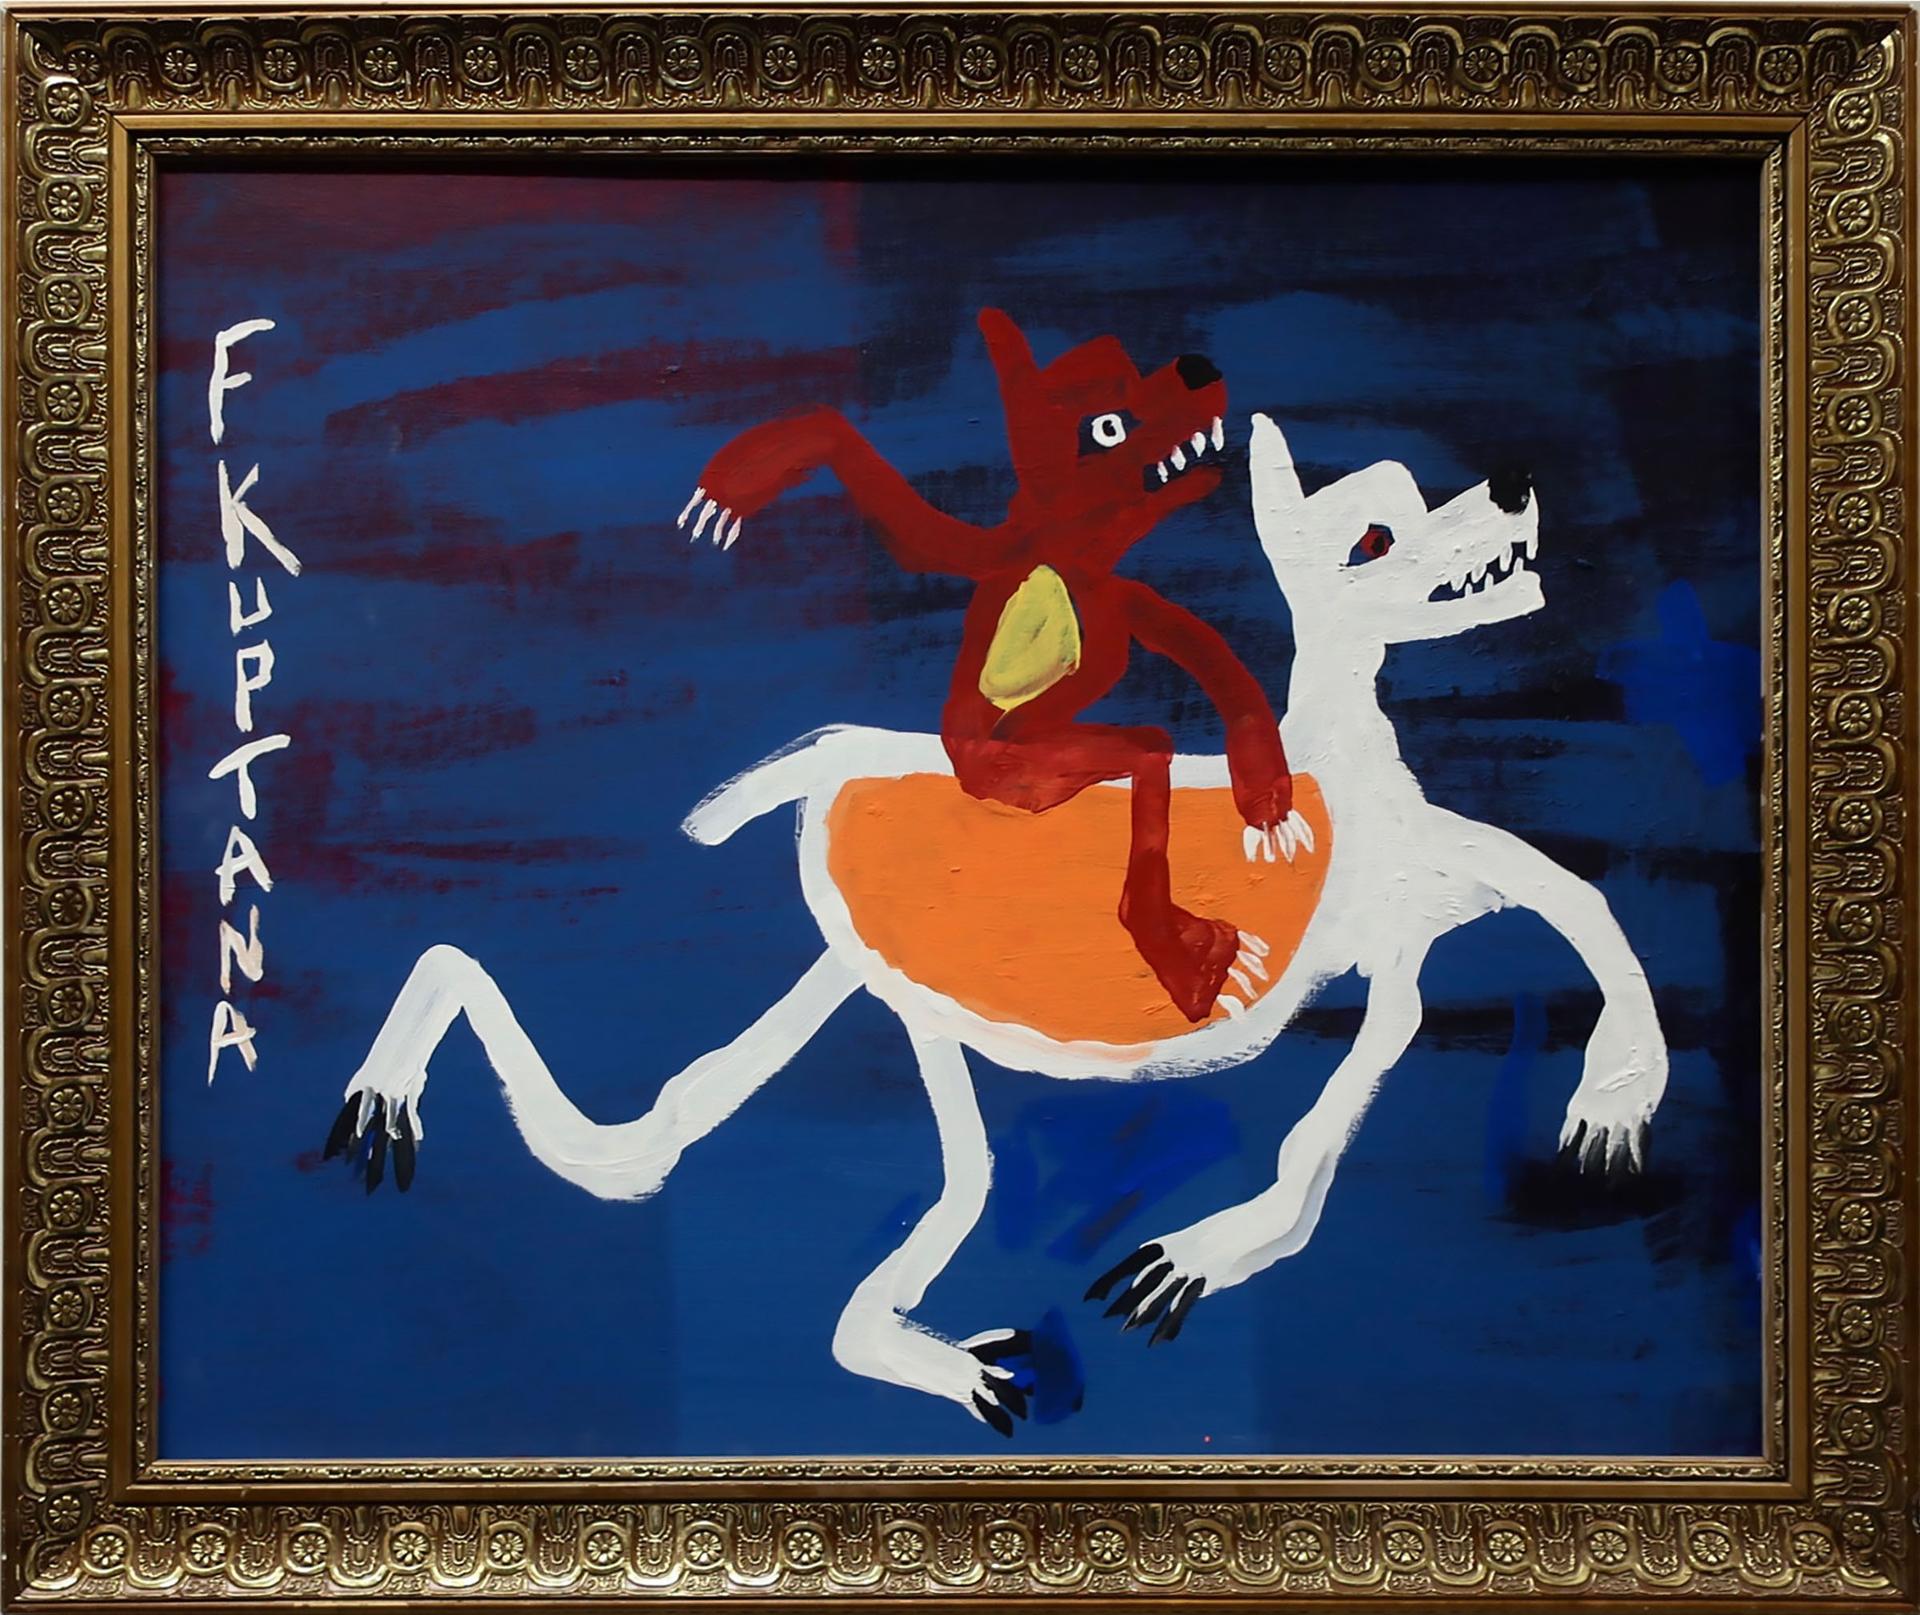 Floyd Kuptana (1964-2021) - Untitled (Red Rider)